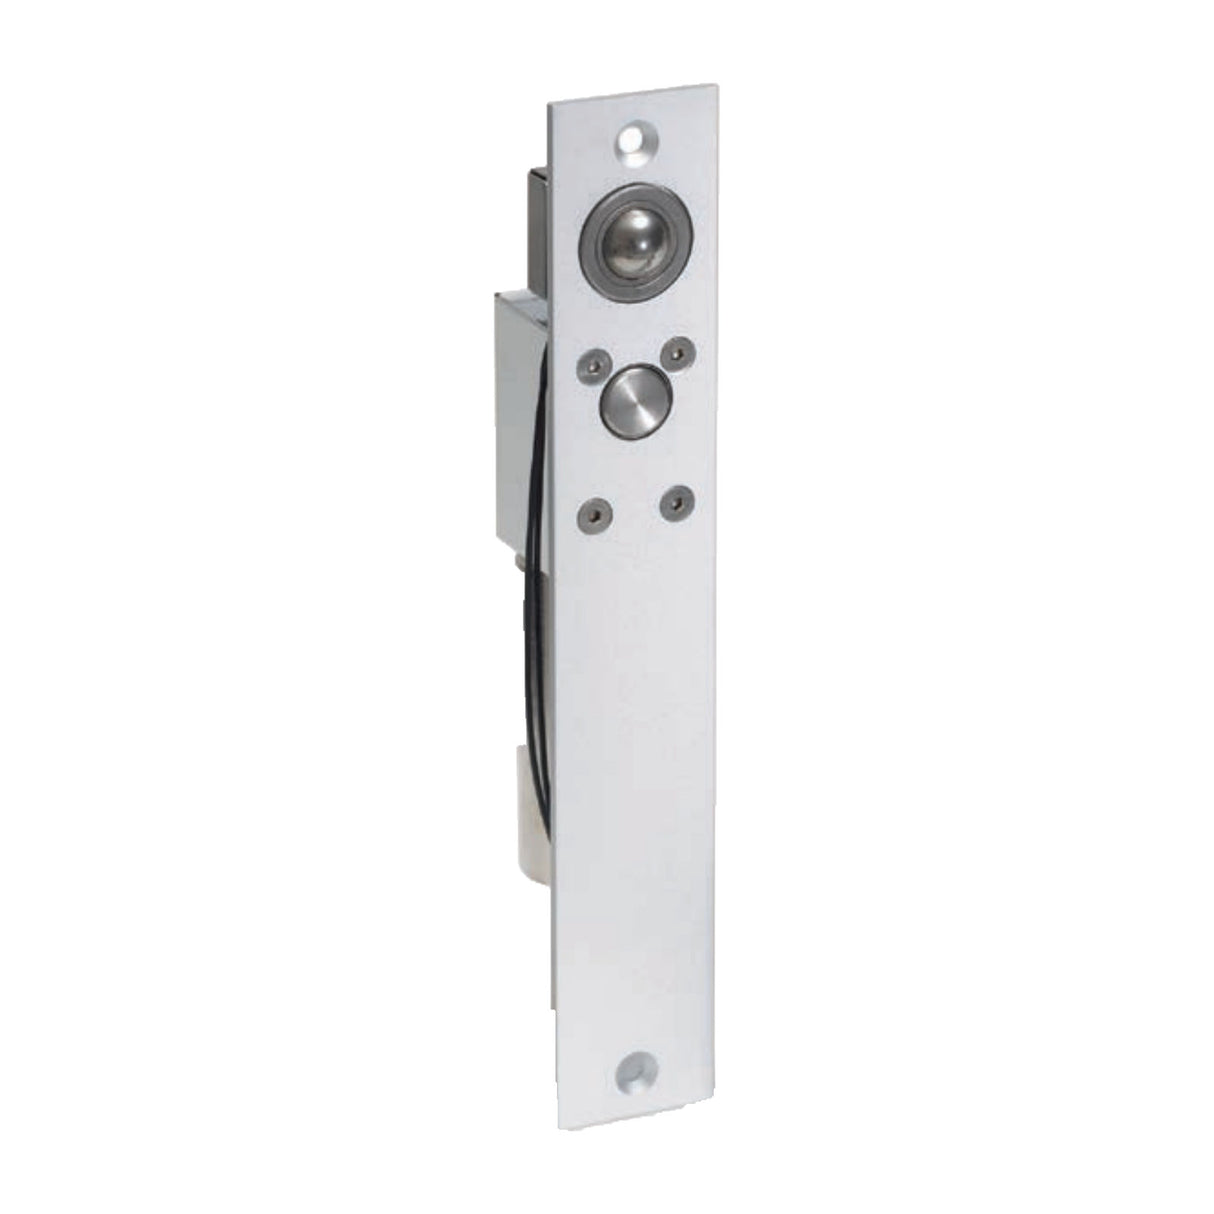 Doorking DKEB-M-1LD Electric Deadbolt W/ Lock & Door Sensor